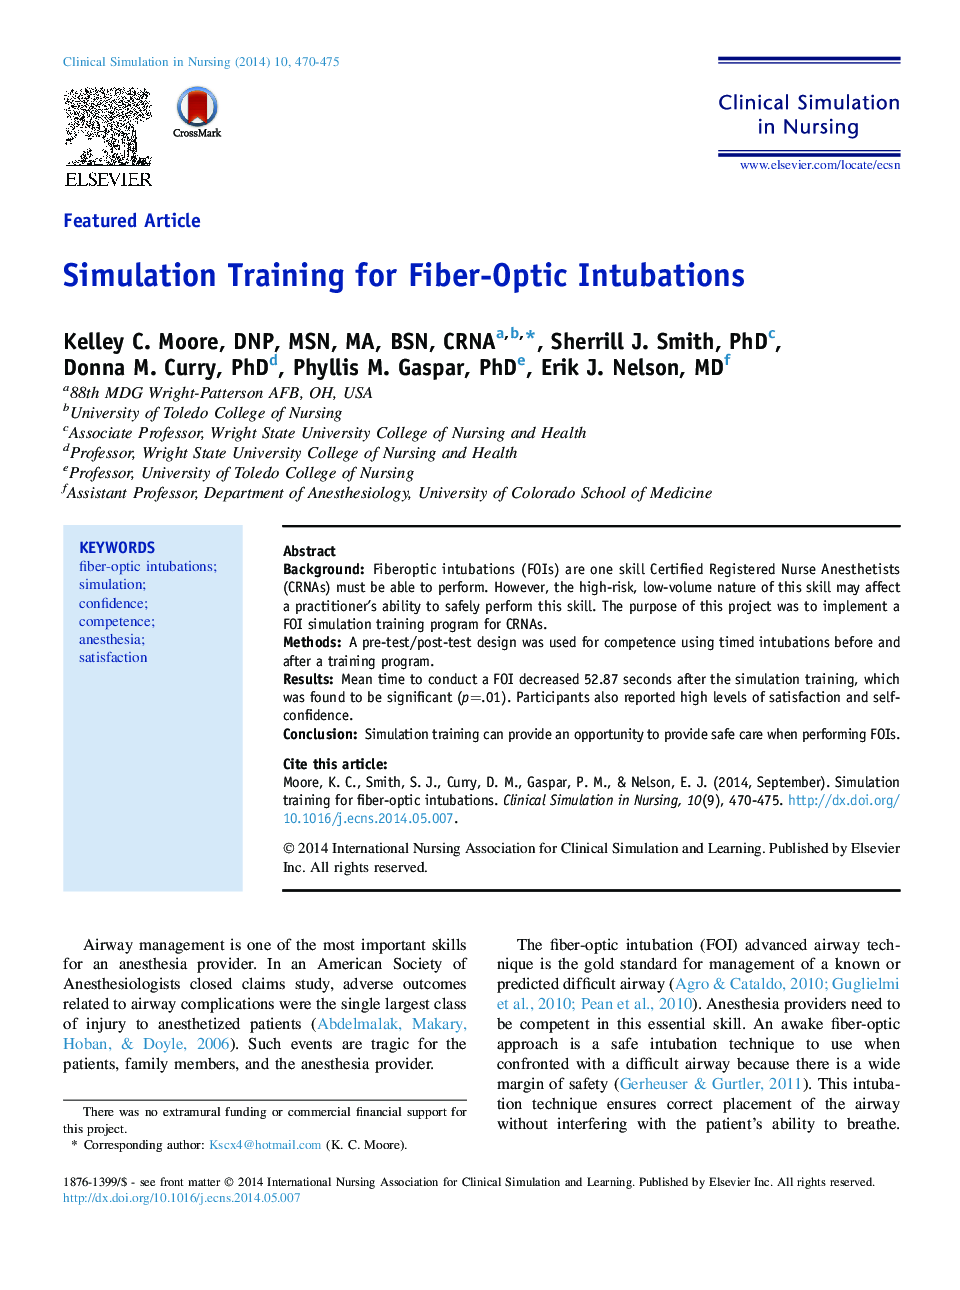 Simulation Training for Fiber-Optic Intubations 